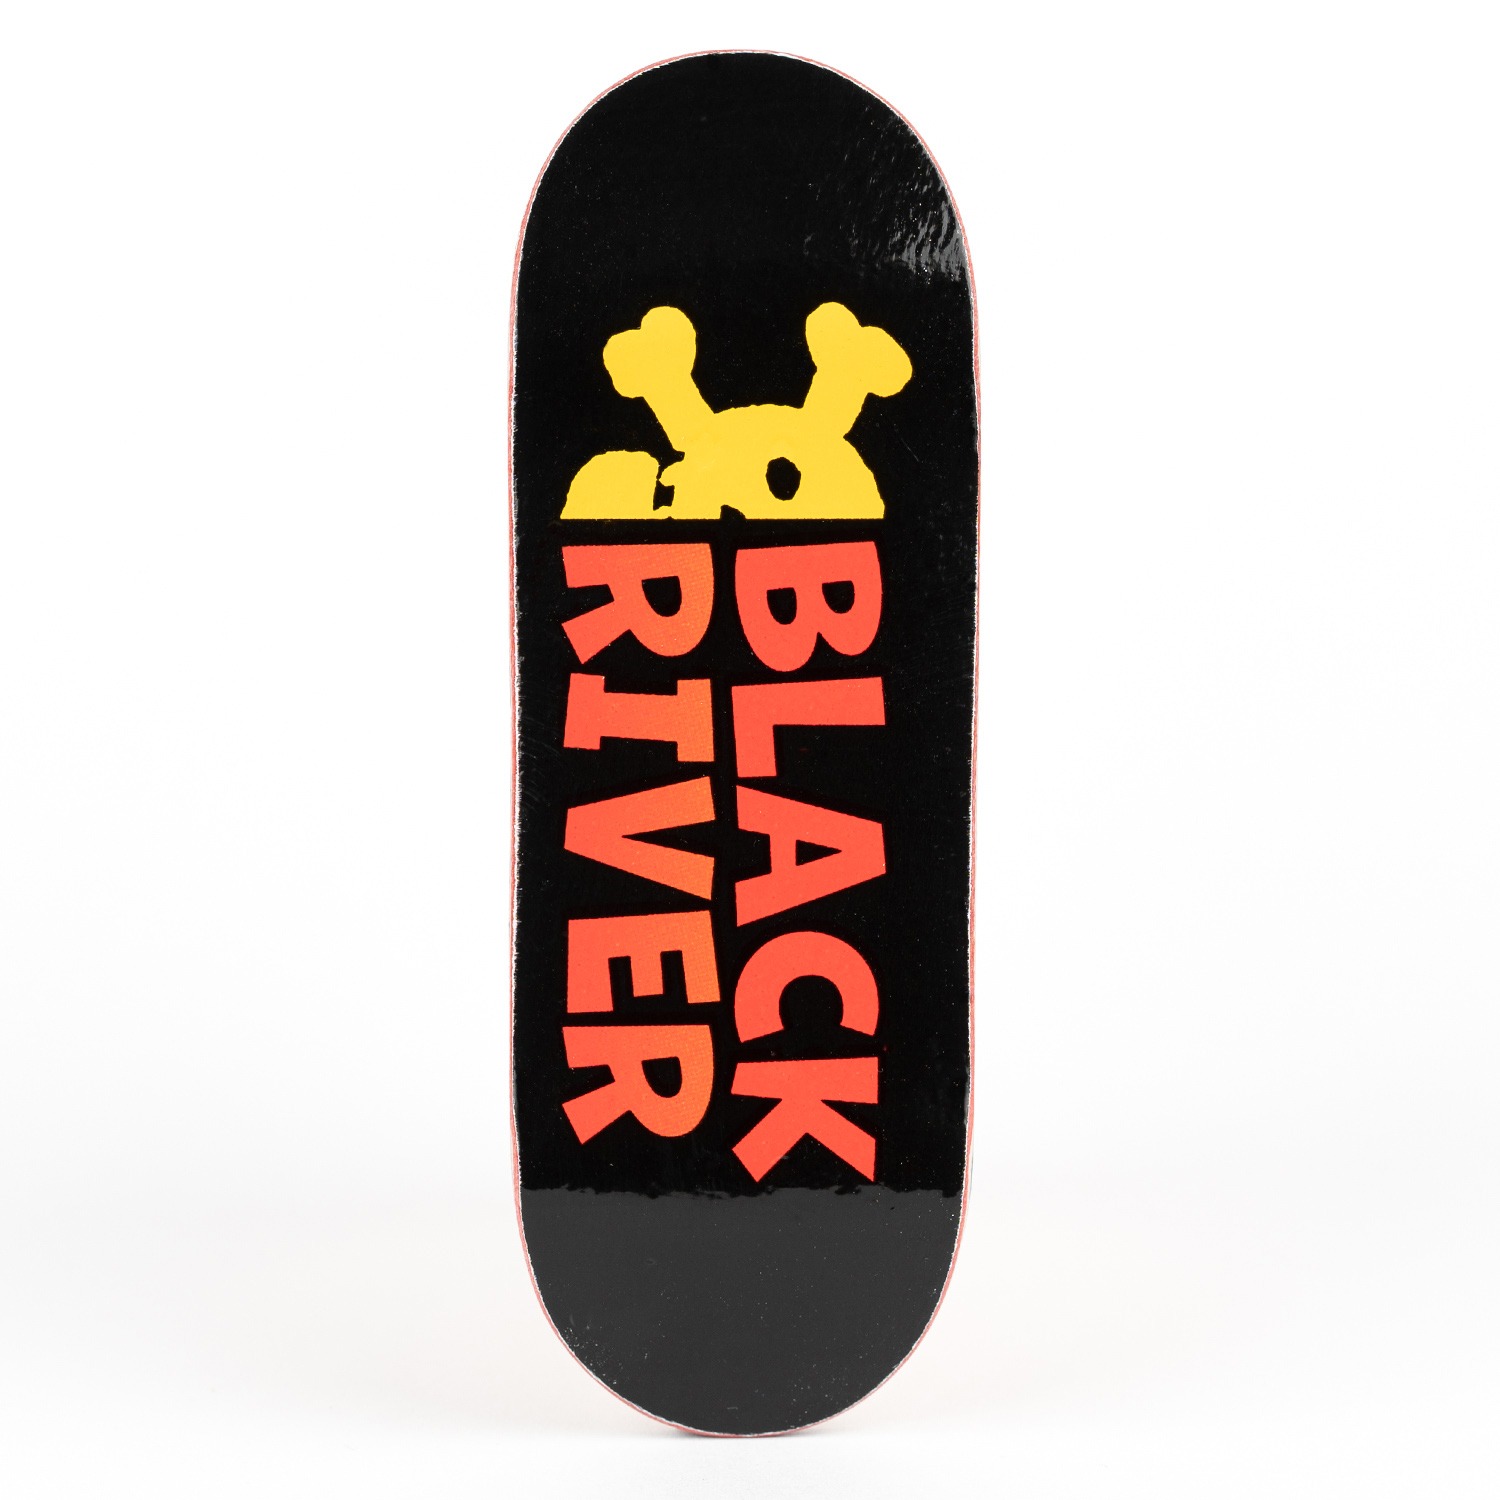 BLACKRIVER - Riverlabel Letters (32/33.3mm) 5-ply Fingerboard Deck